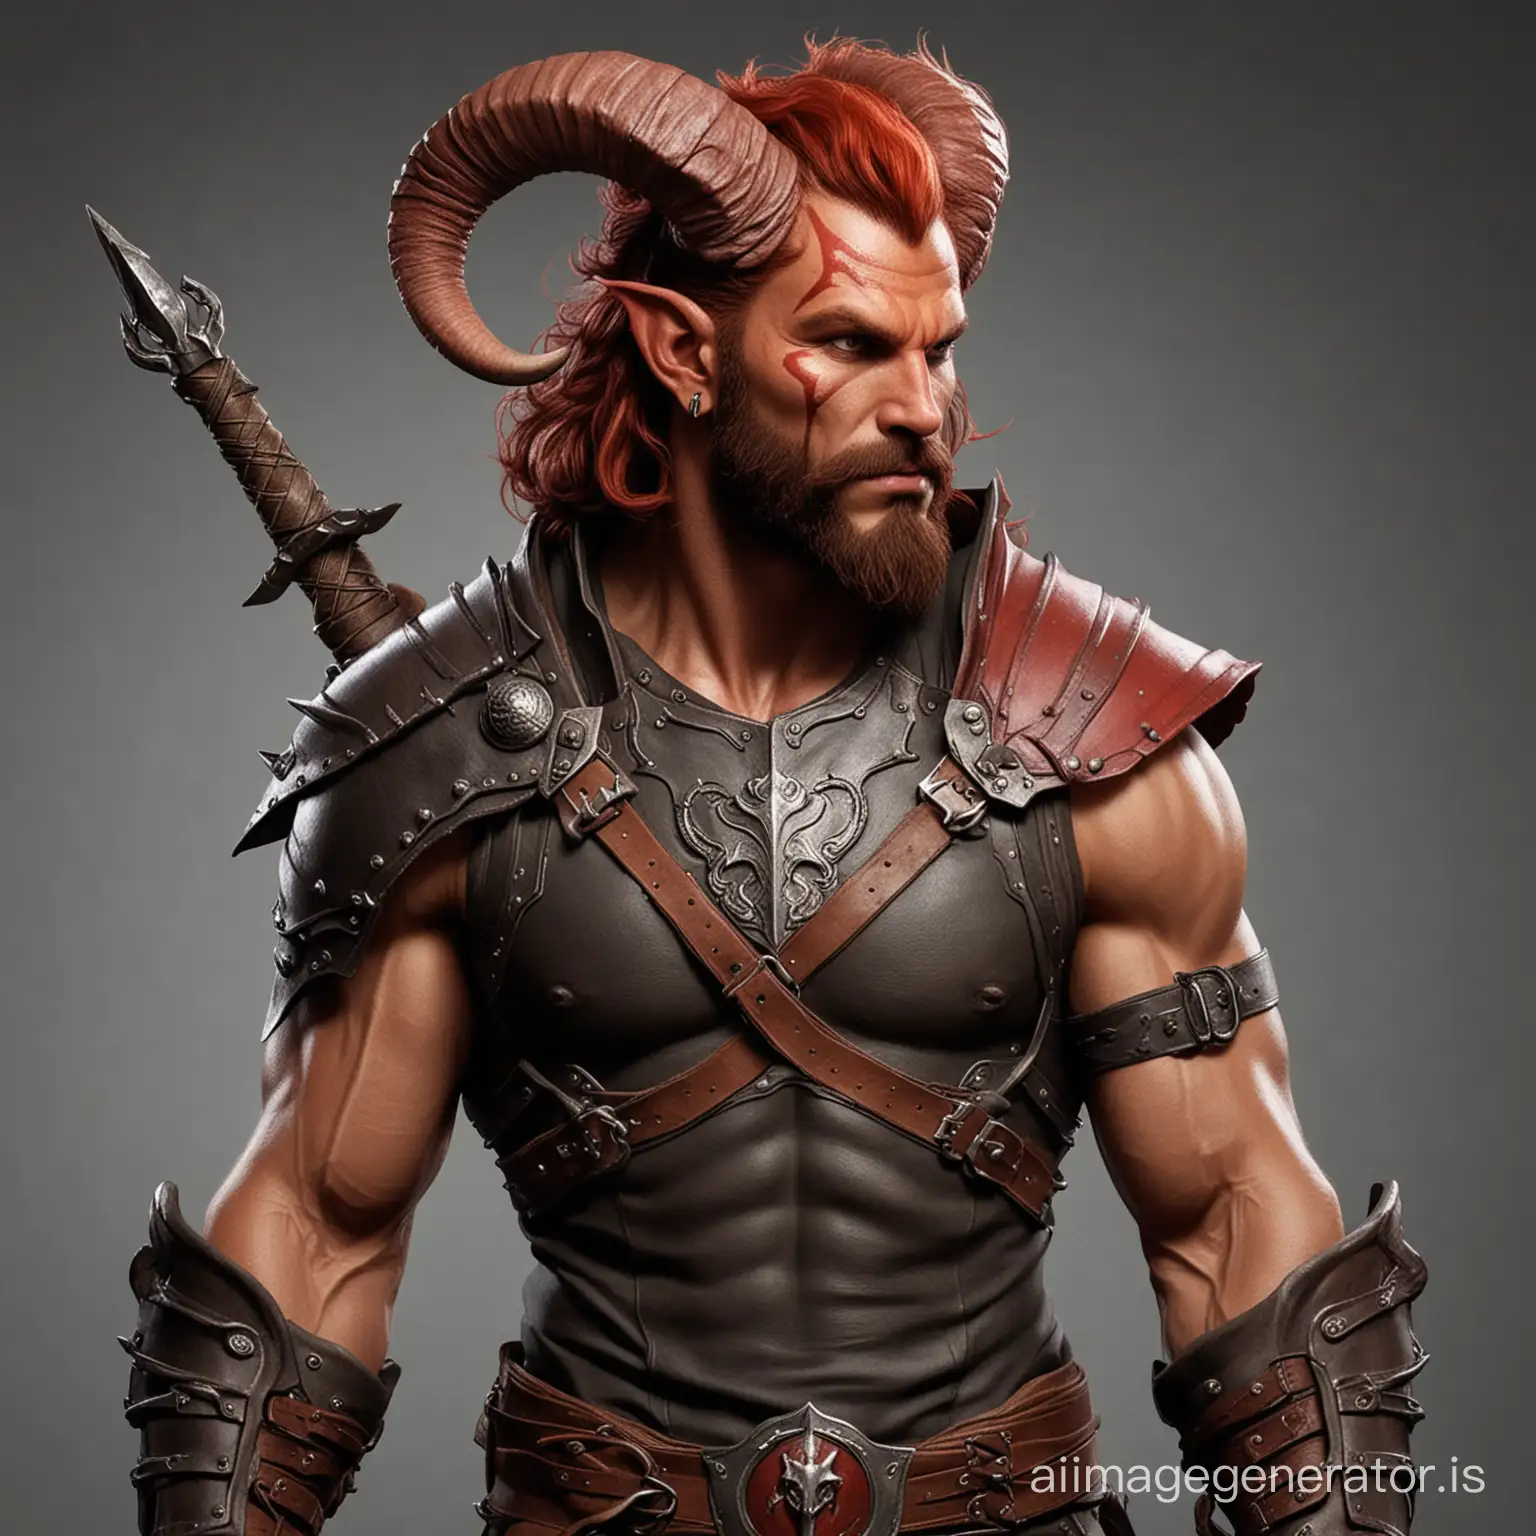 Male Tiefling Warrior, Buff, Strong, Bearded, Red Skin, Armor.